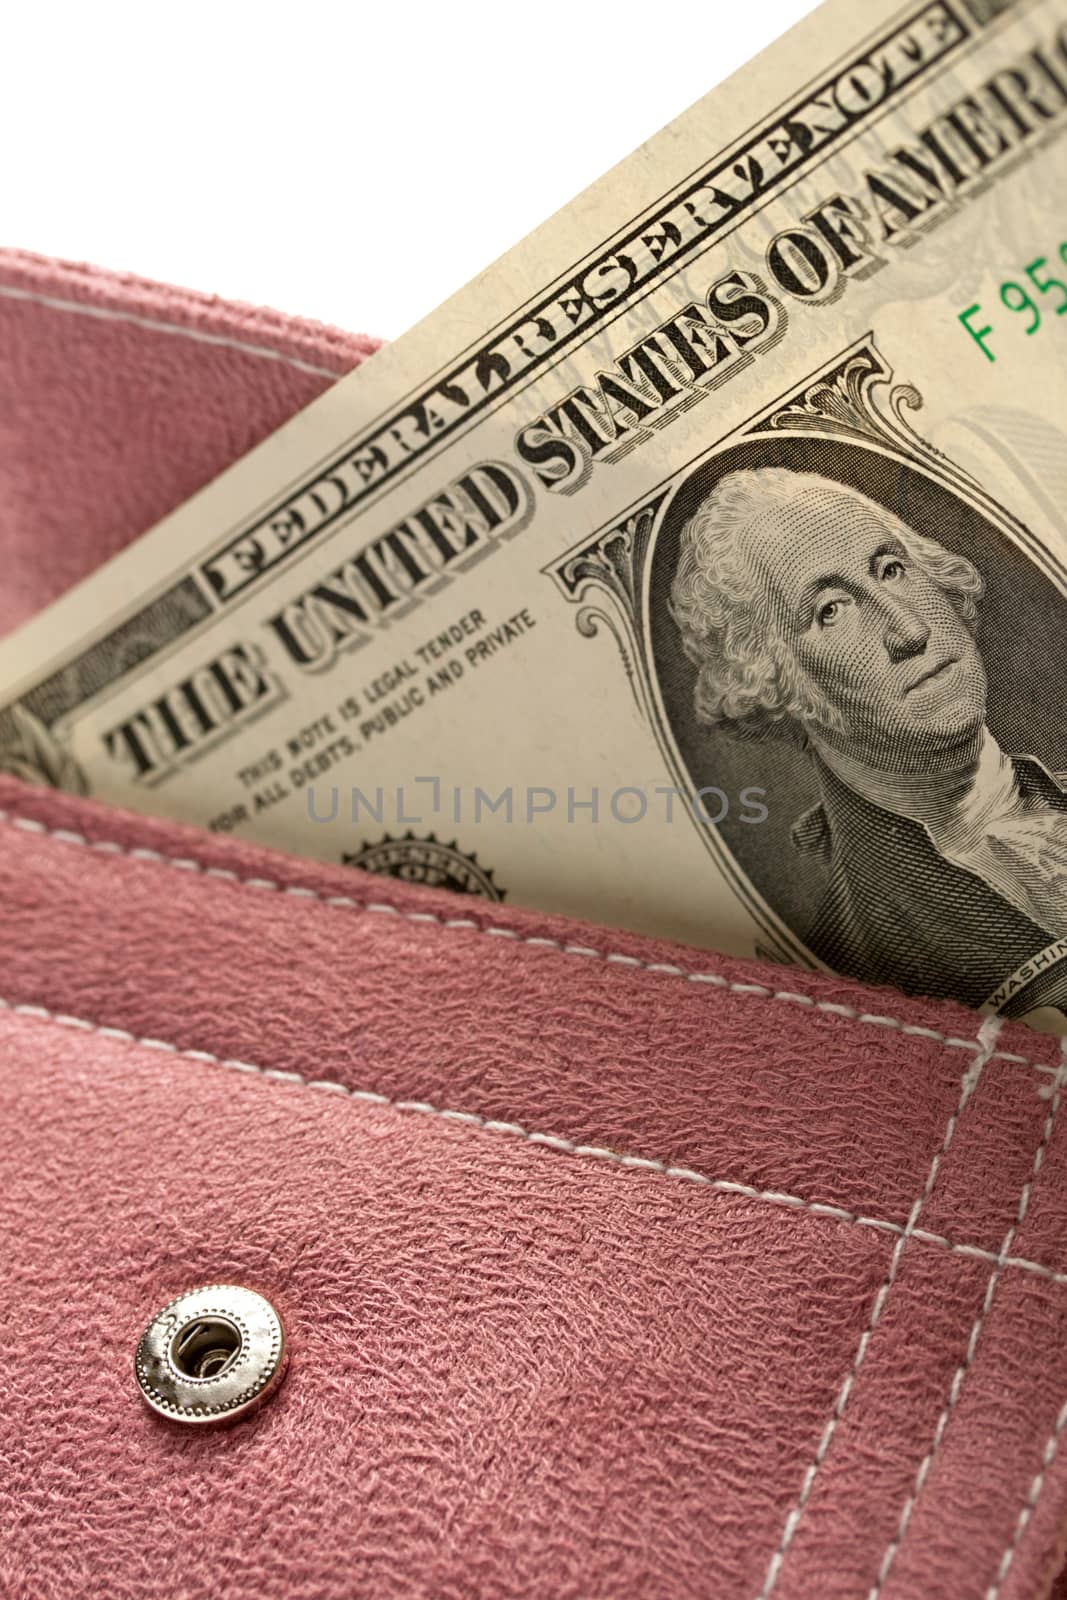 Lilac corduroy purse with dollar